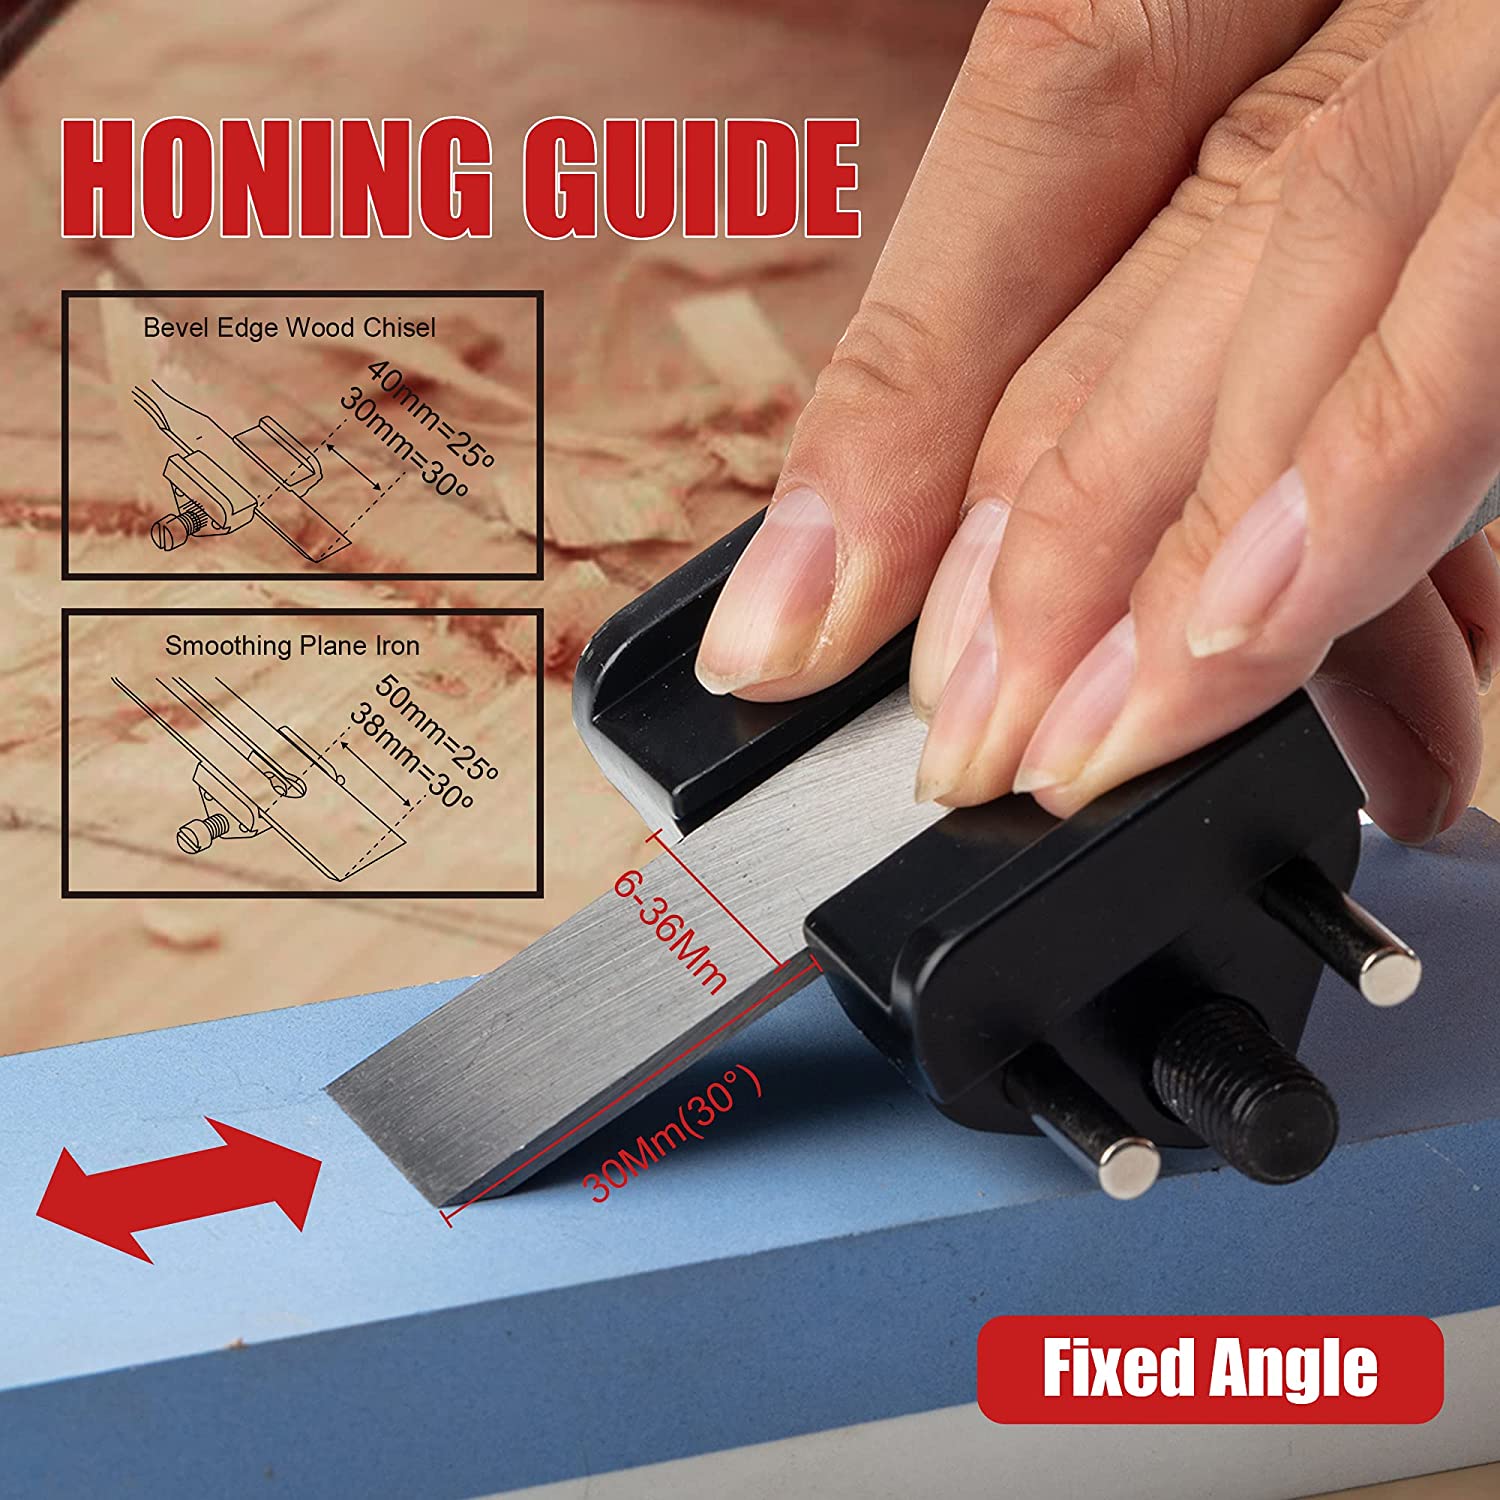 Honing Guide for Wood Chisel, Planer Blade